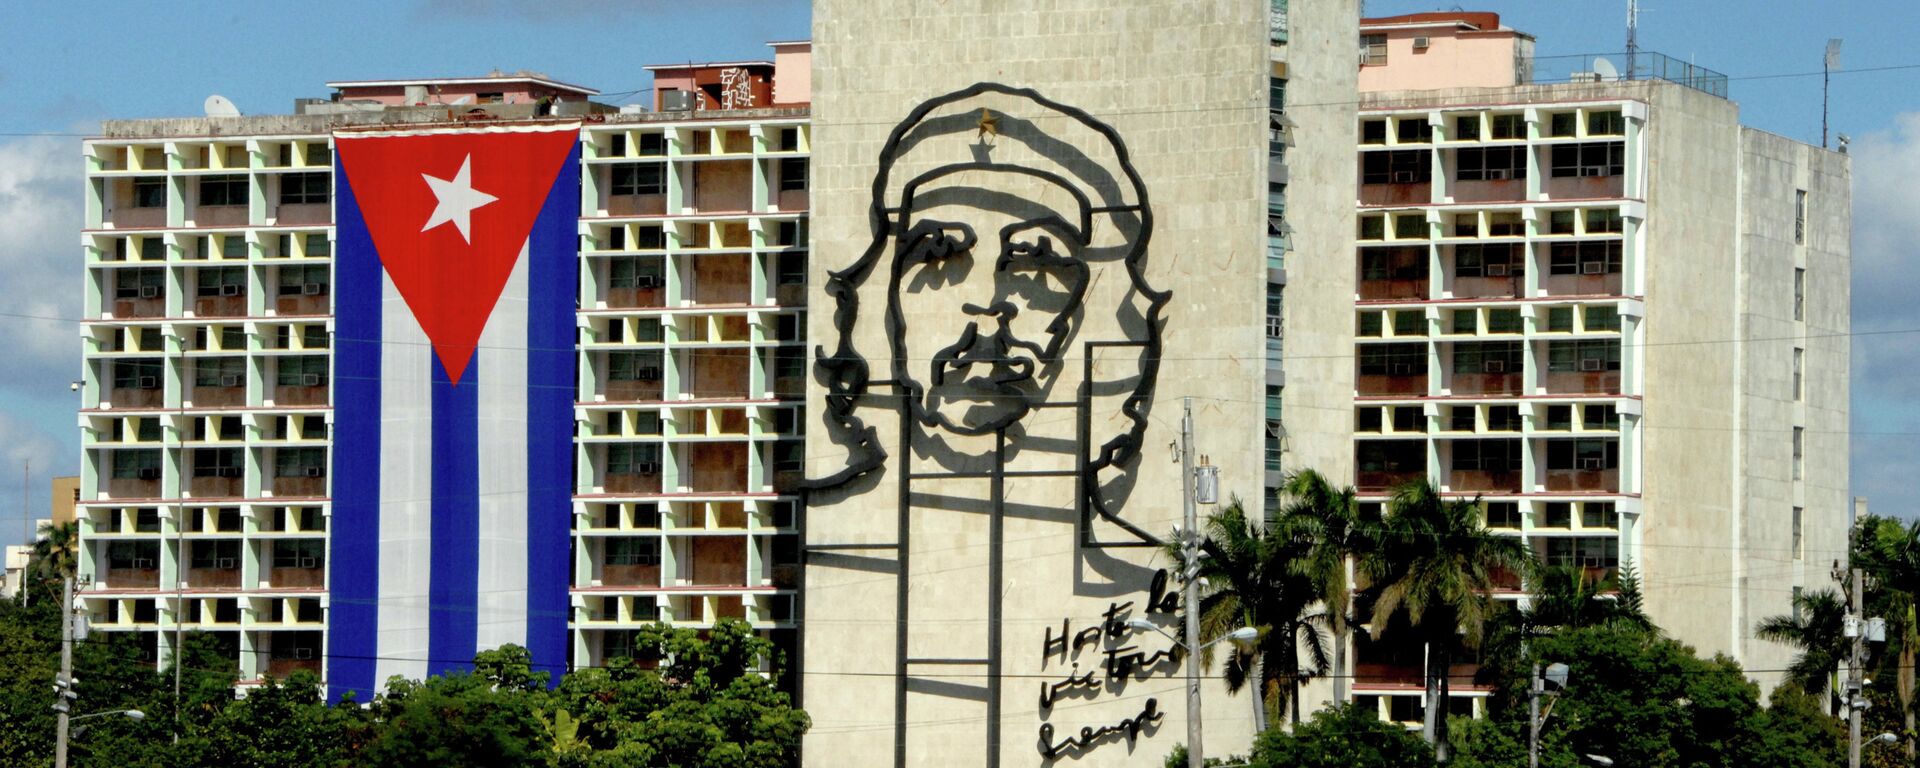 Havana. Cuba - Sputnik International, 1920, 17.07.2021